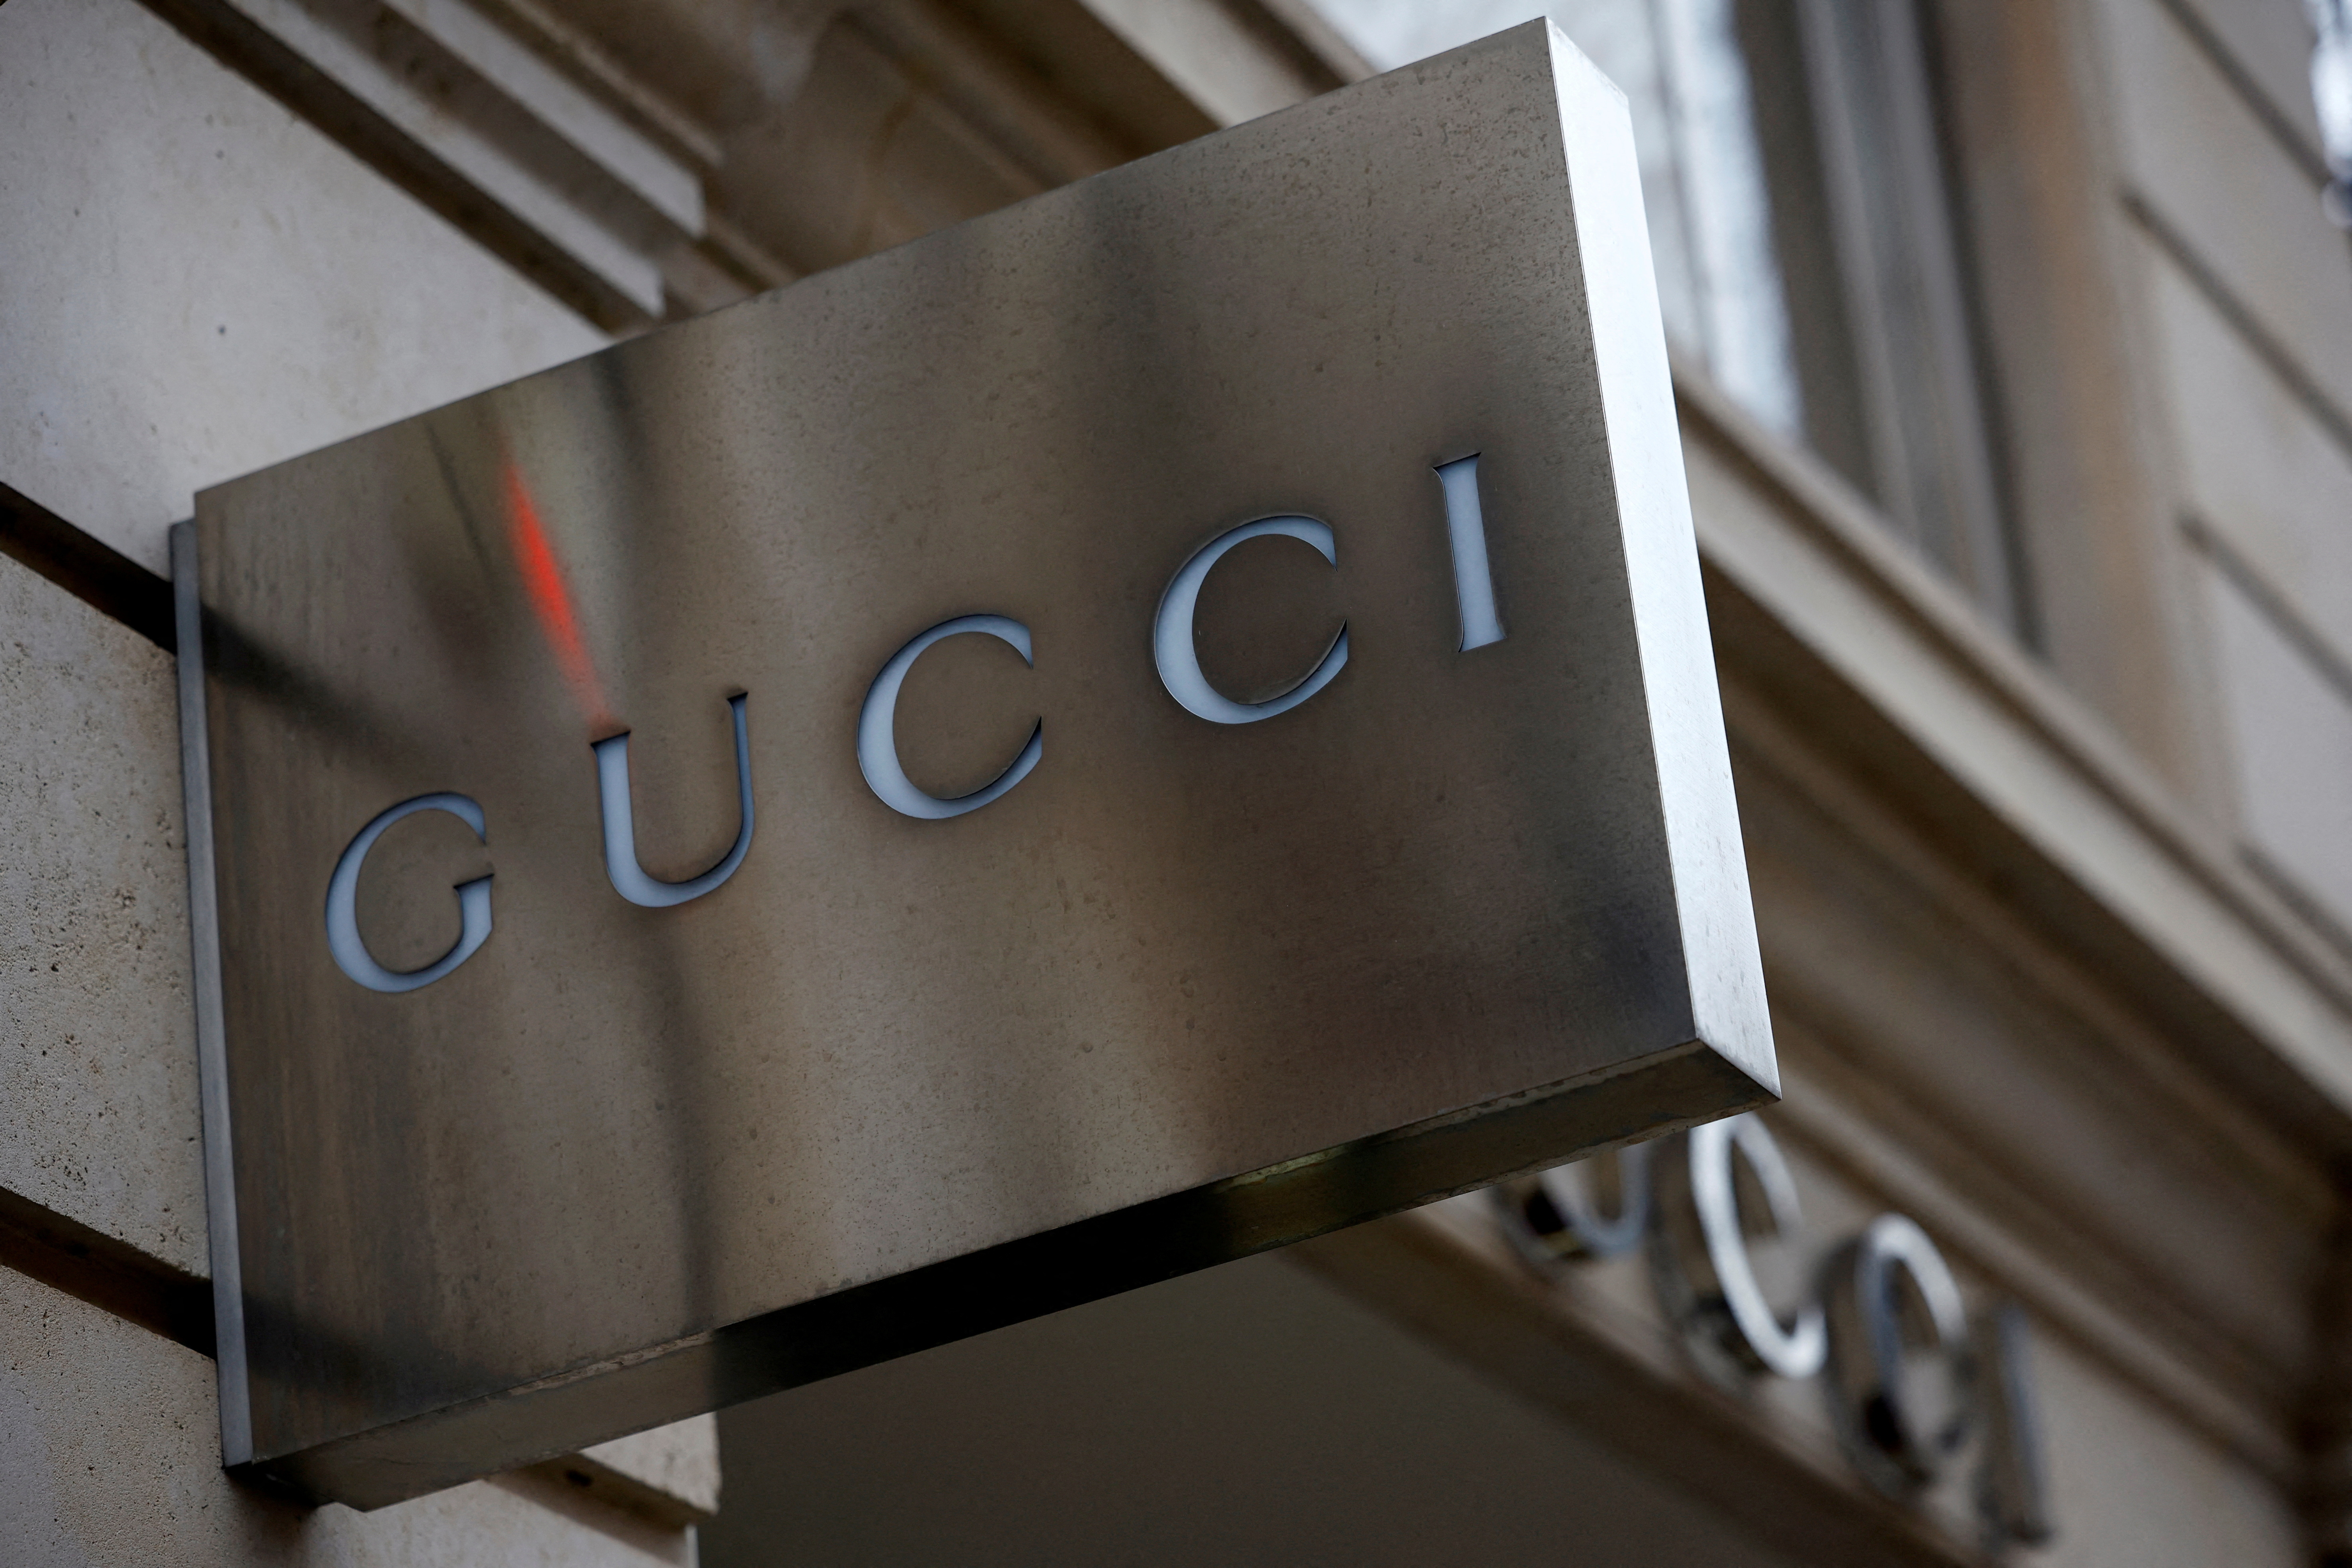 A Gucci logo is seen outside a shop in Paris